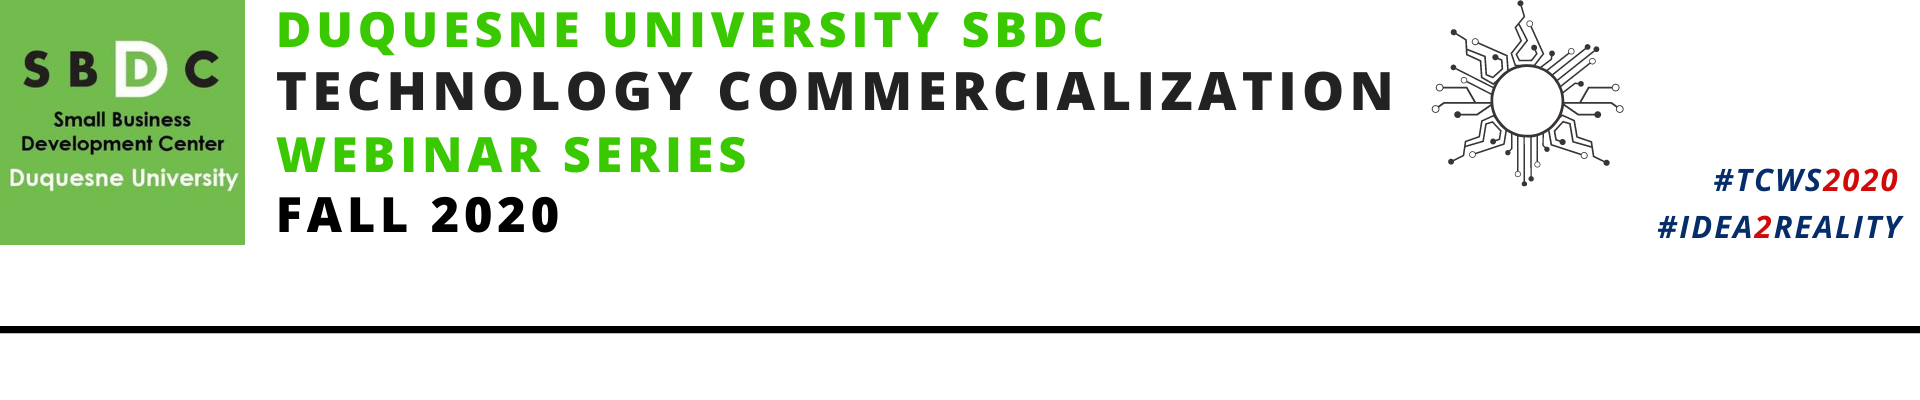 Technology Commercialization Webinar Series - DUBDC